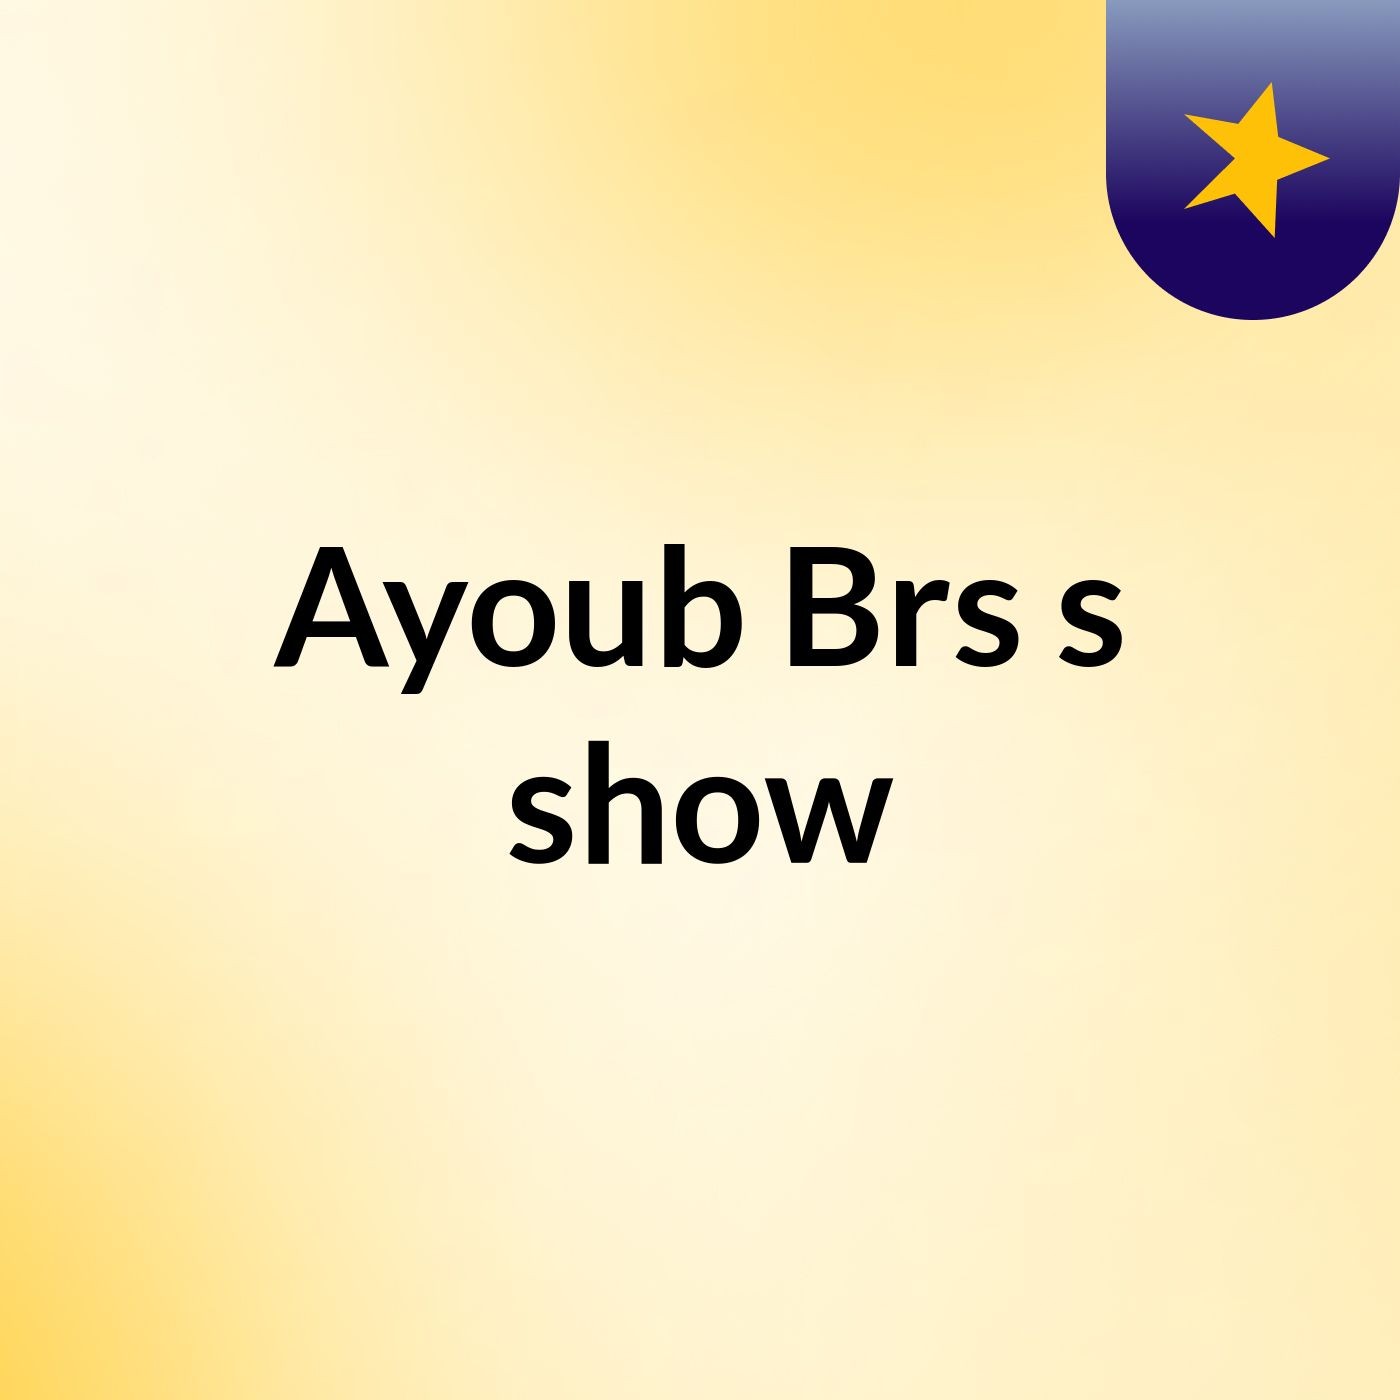 Ayoub Brs's show